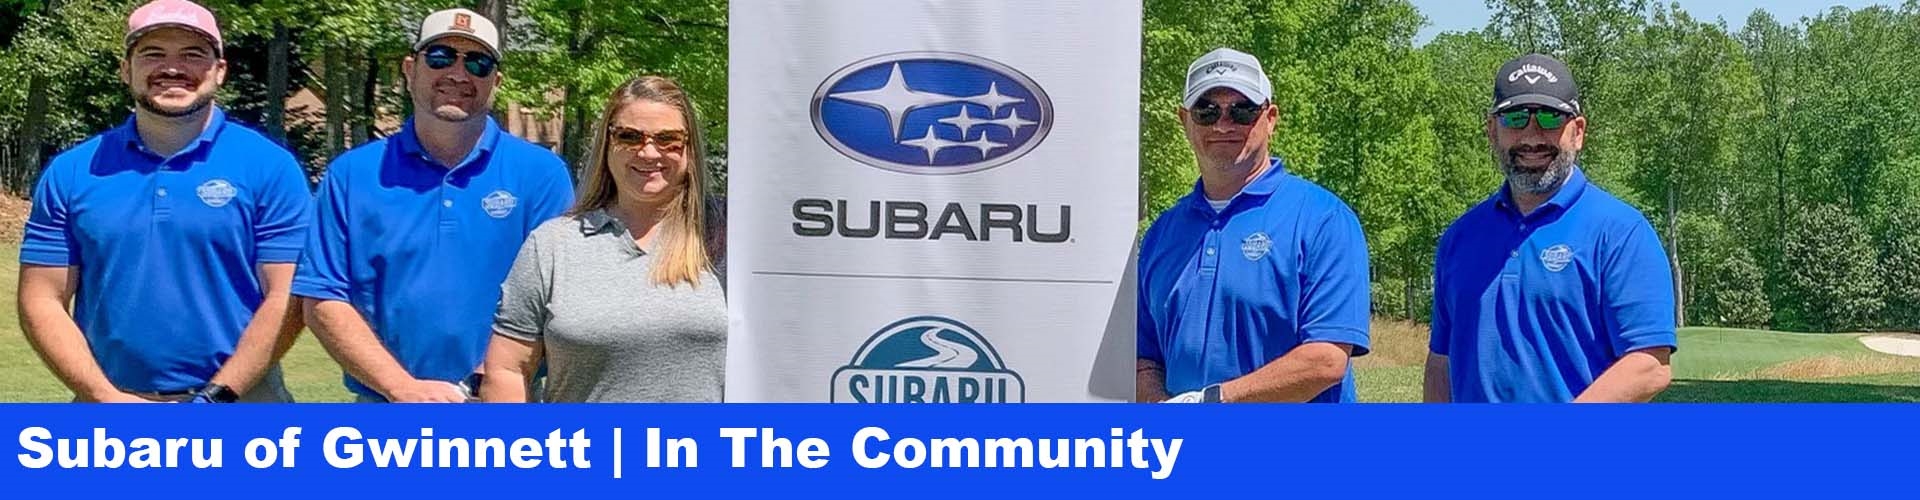 Subaru of Gwinnett | In the Community